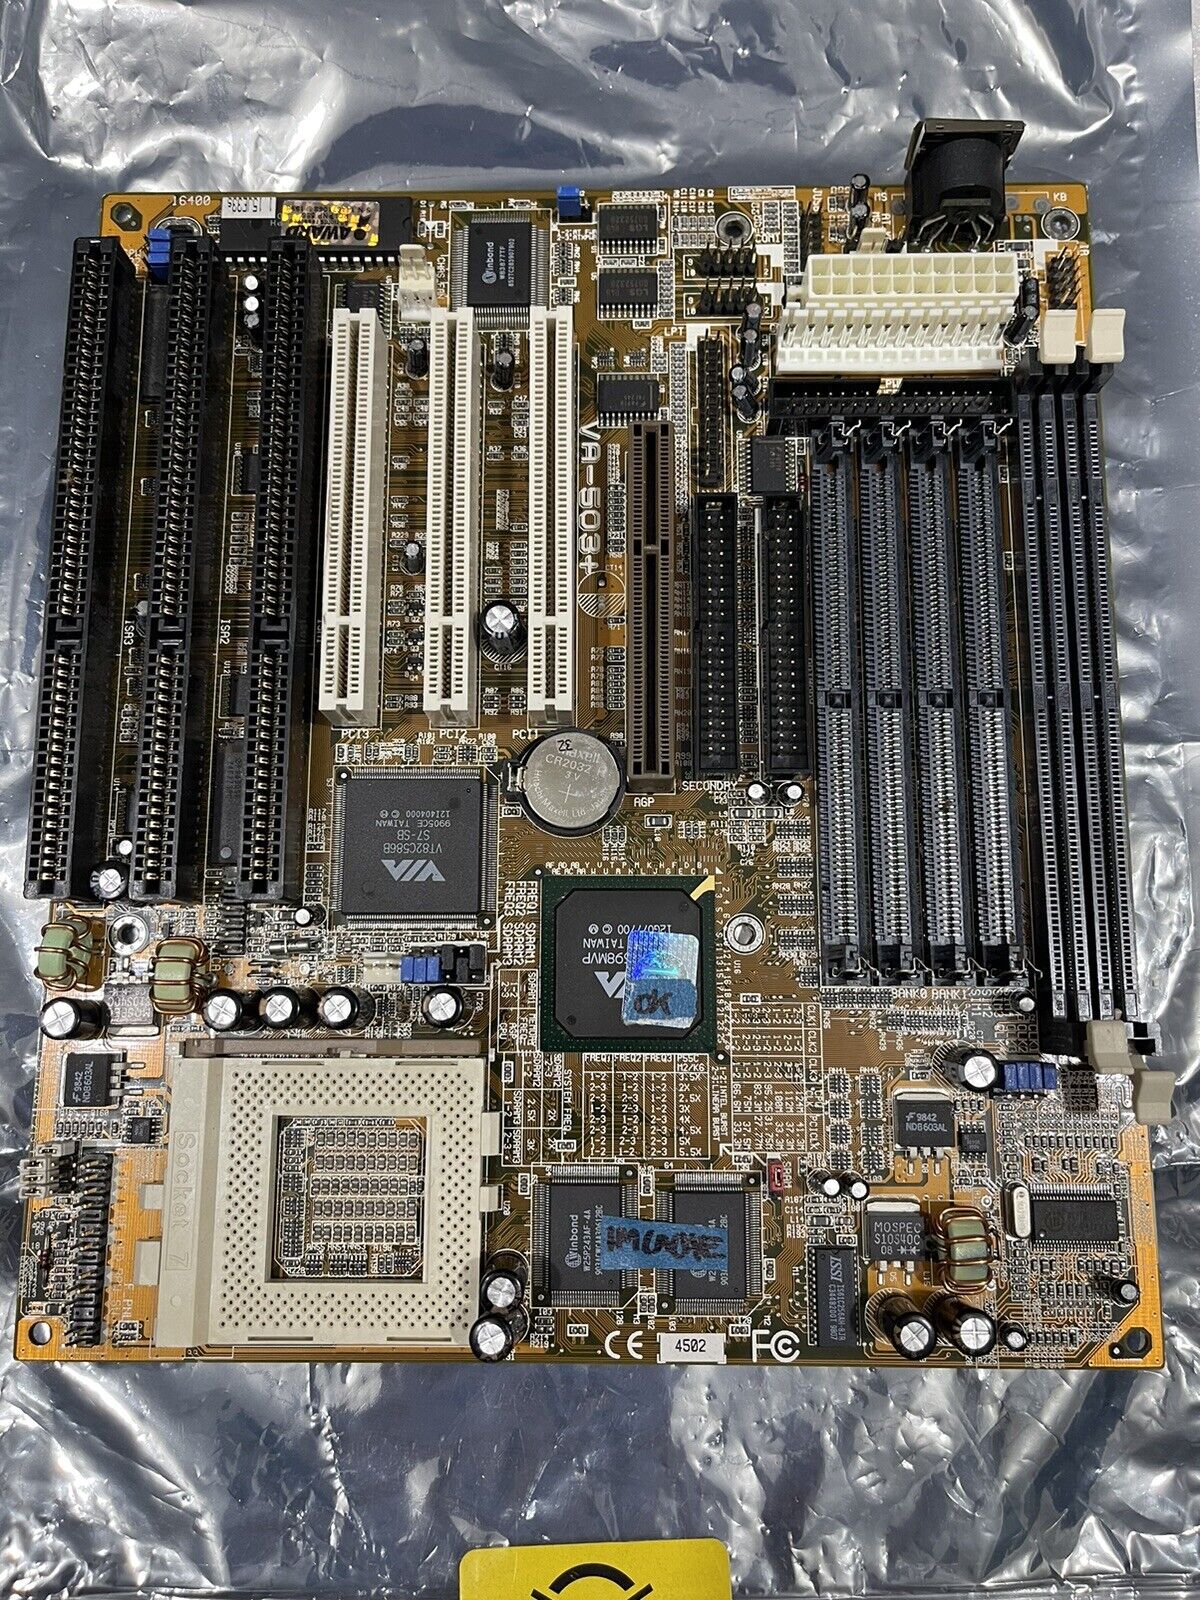 VINTAGE VIA FIC VA-503+ 1.2A Super Socket 7 Intel AMD Cyrix Baby AT Motherboard